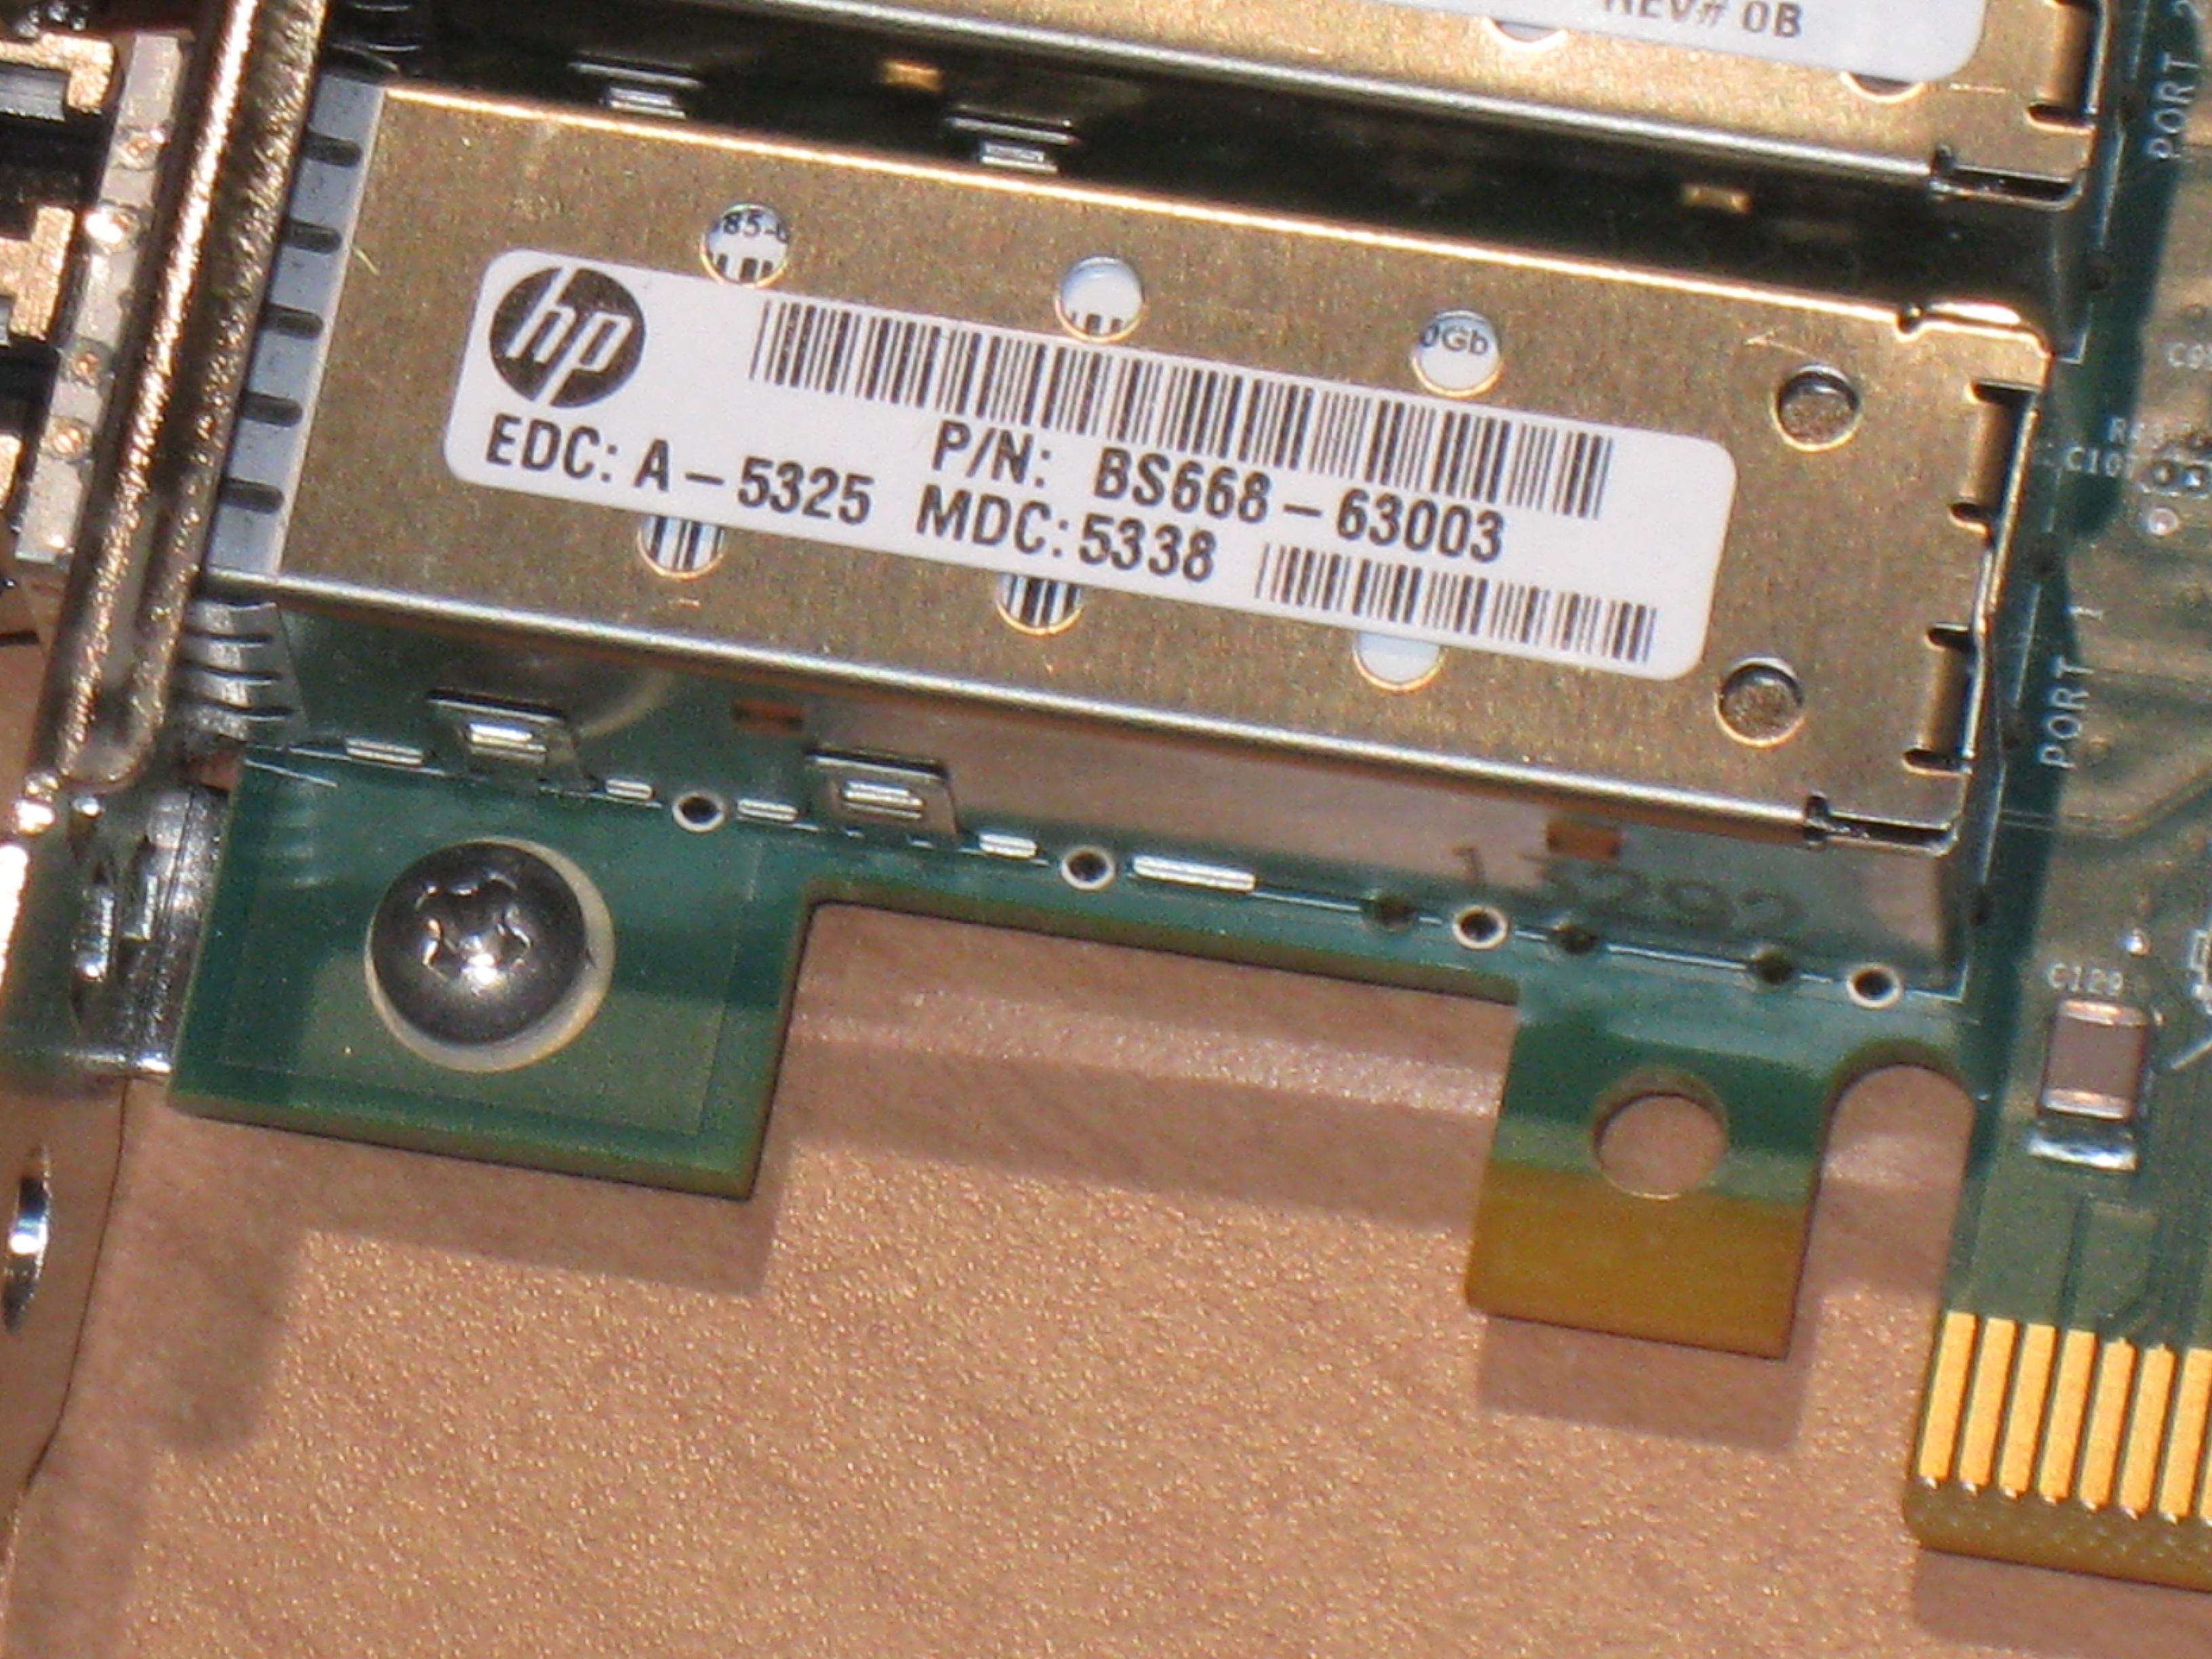 中古 HP BS668A CN1000Q Dual Port Converged Network Adapter